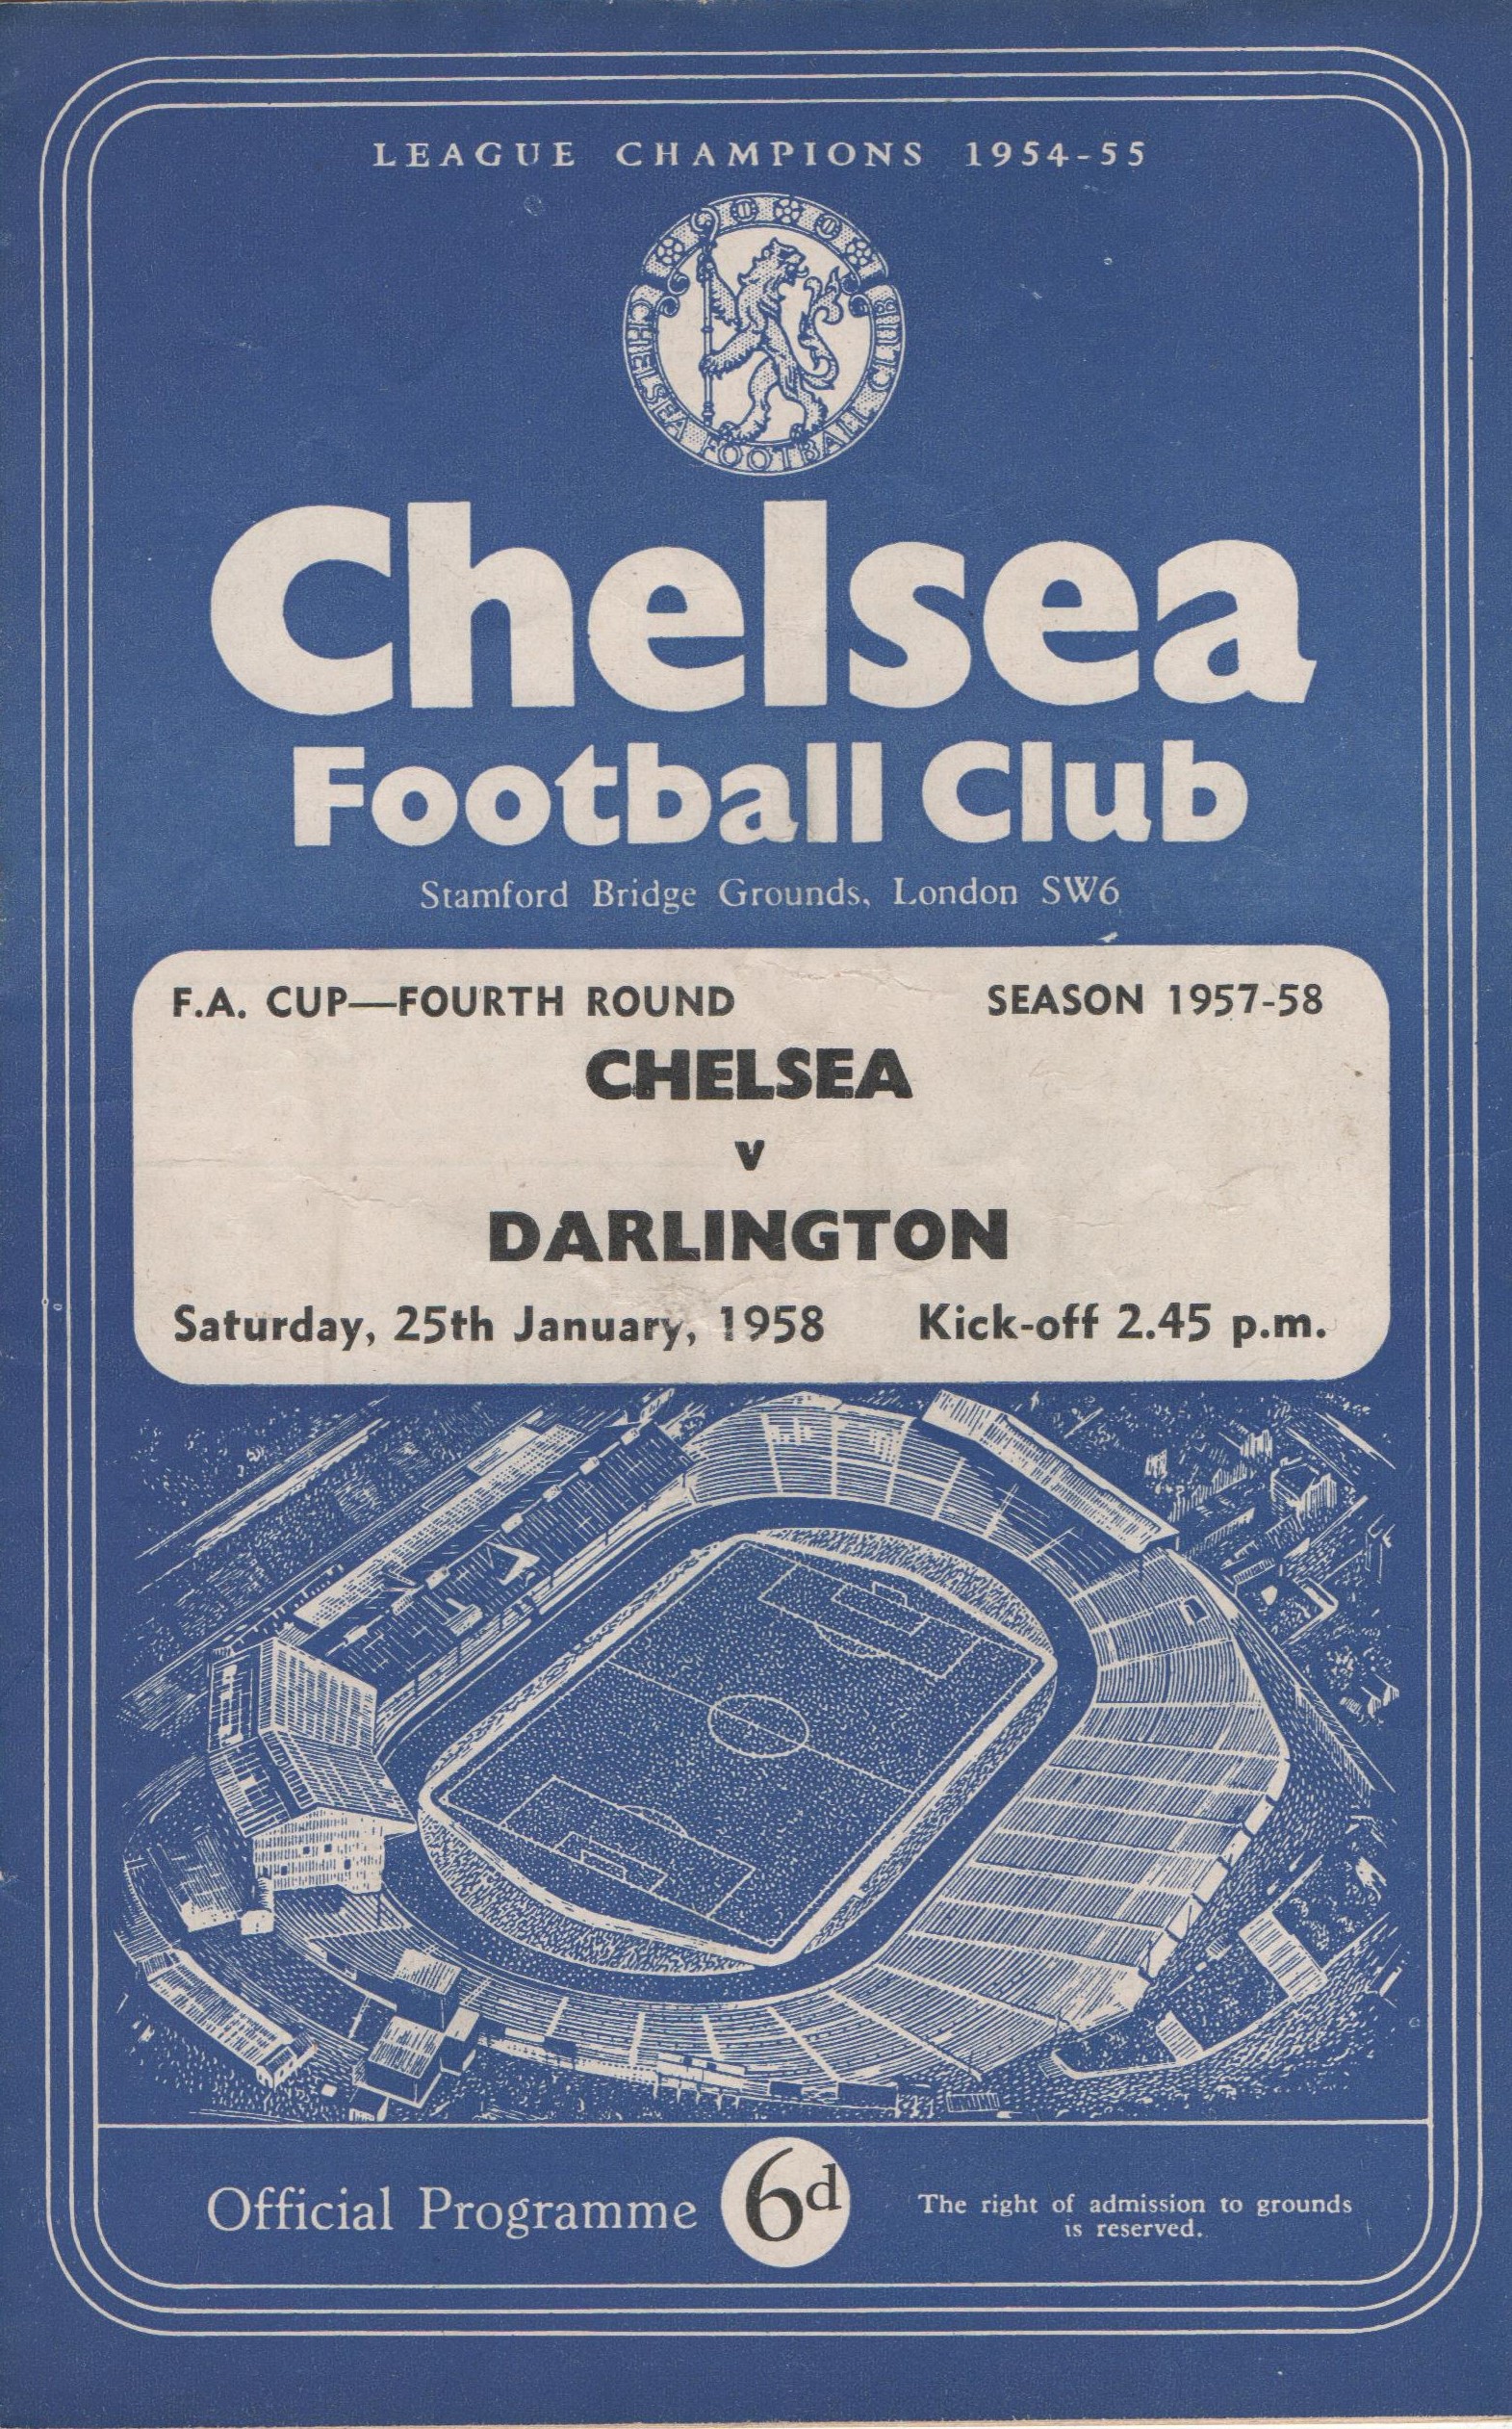 Memory Match - Chelsea 1958 - Darlington Football Club1571 x 2523